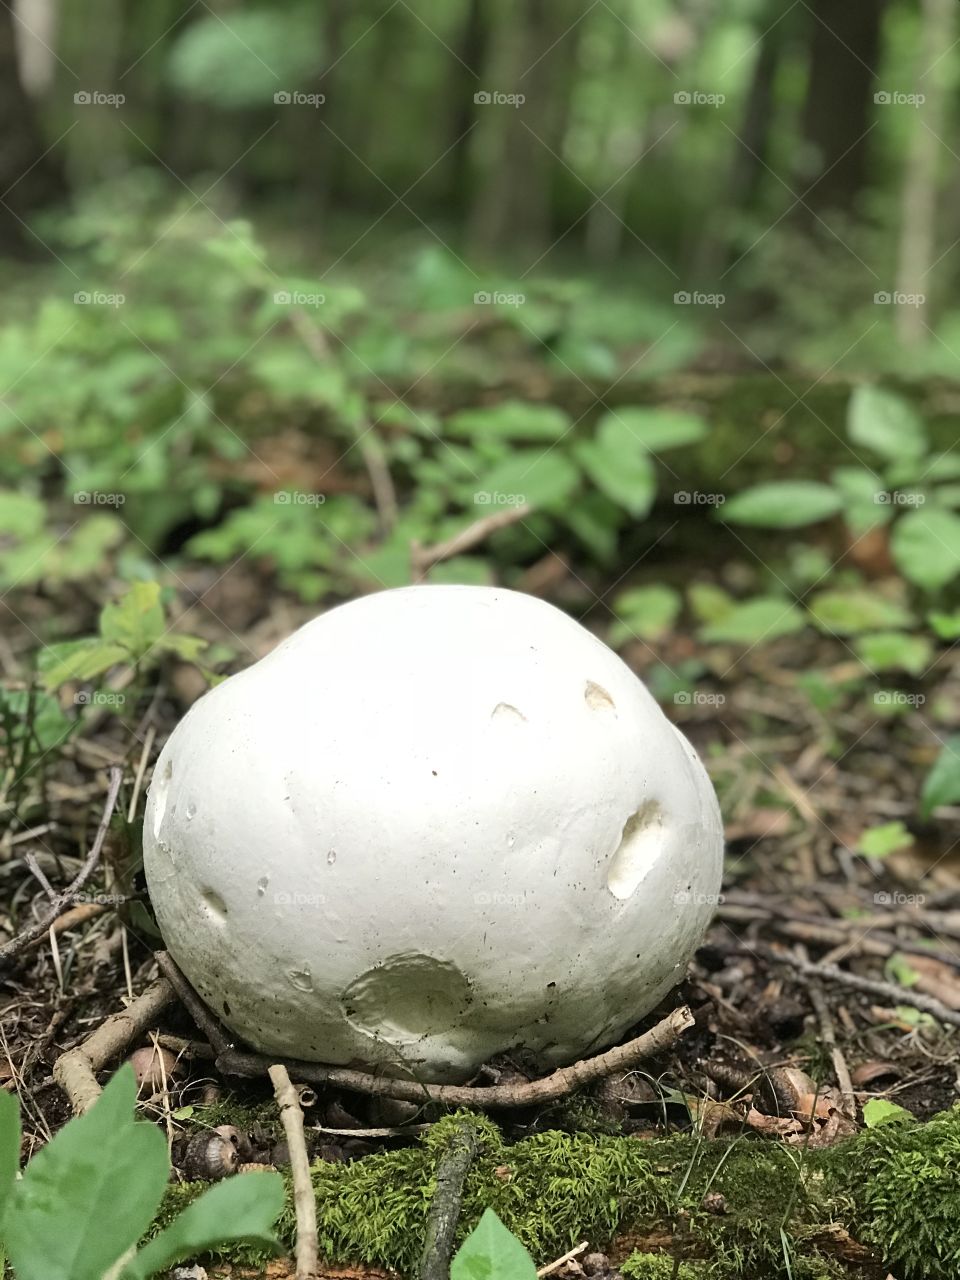 That’s one big mushroom!